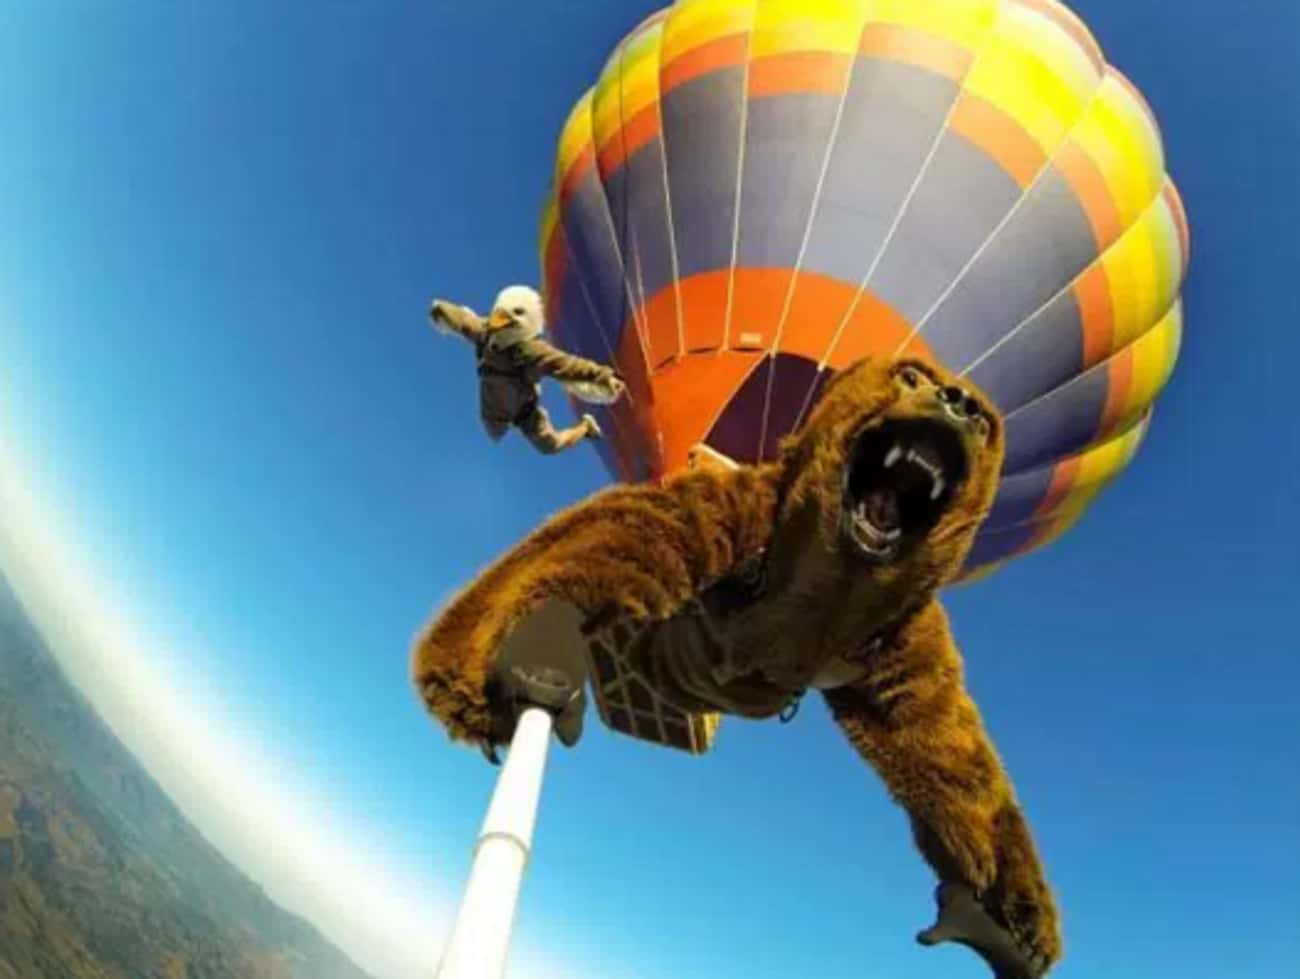 Skydiving Selfie Stick: Bear Edition